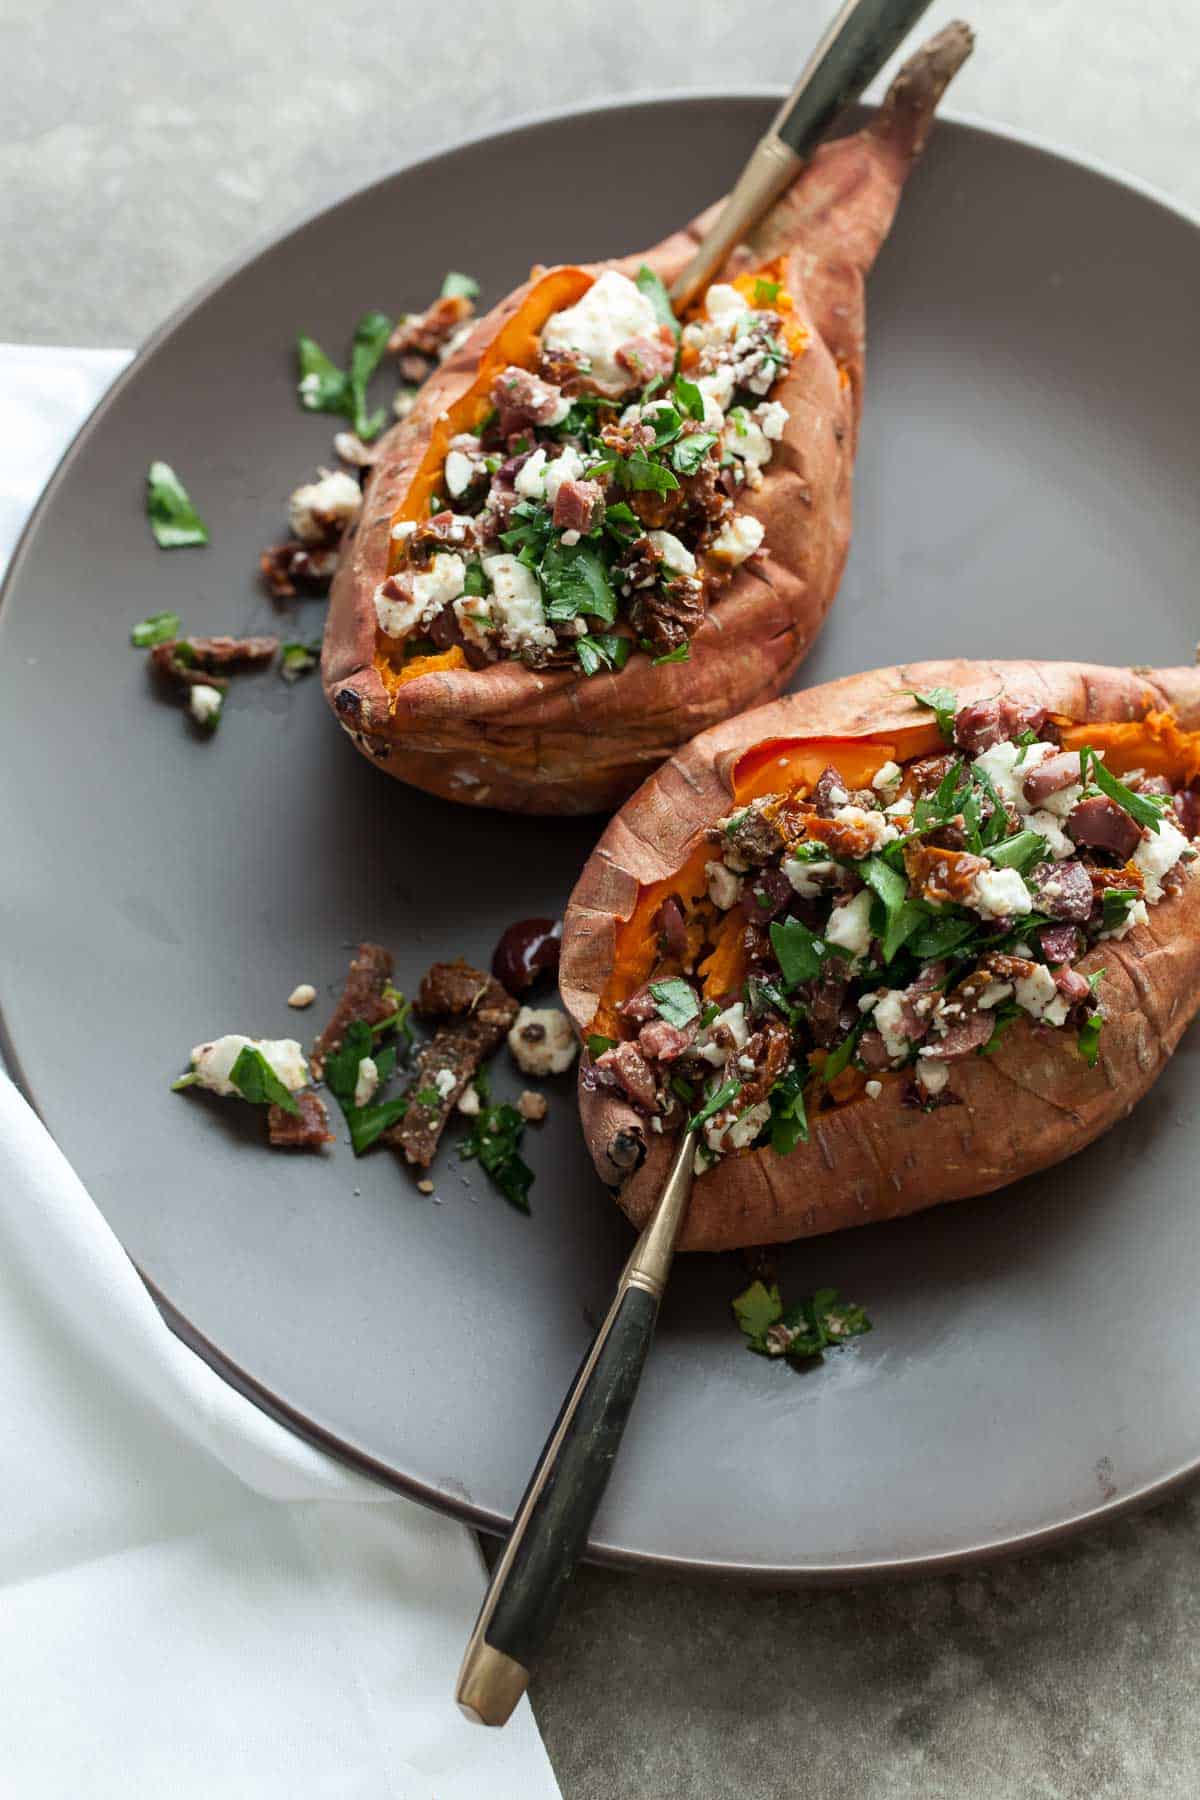 Feta Stuffed Sweet Potato on Plate with Forks